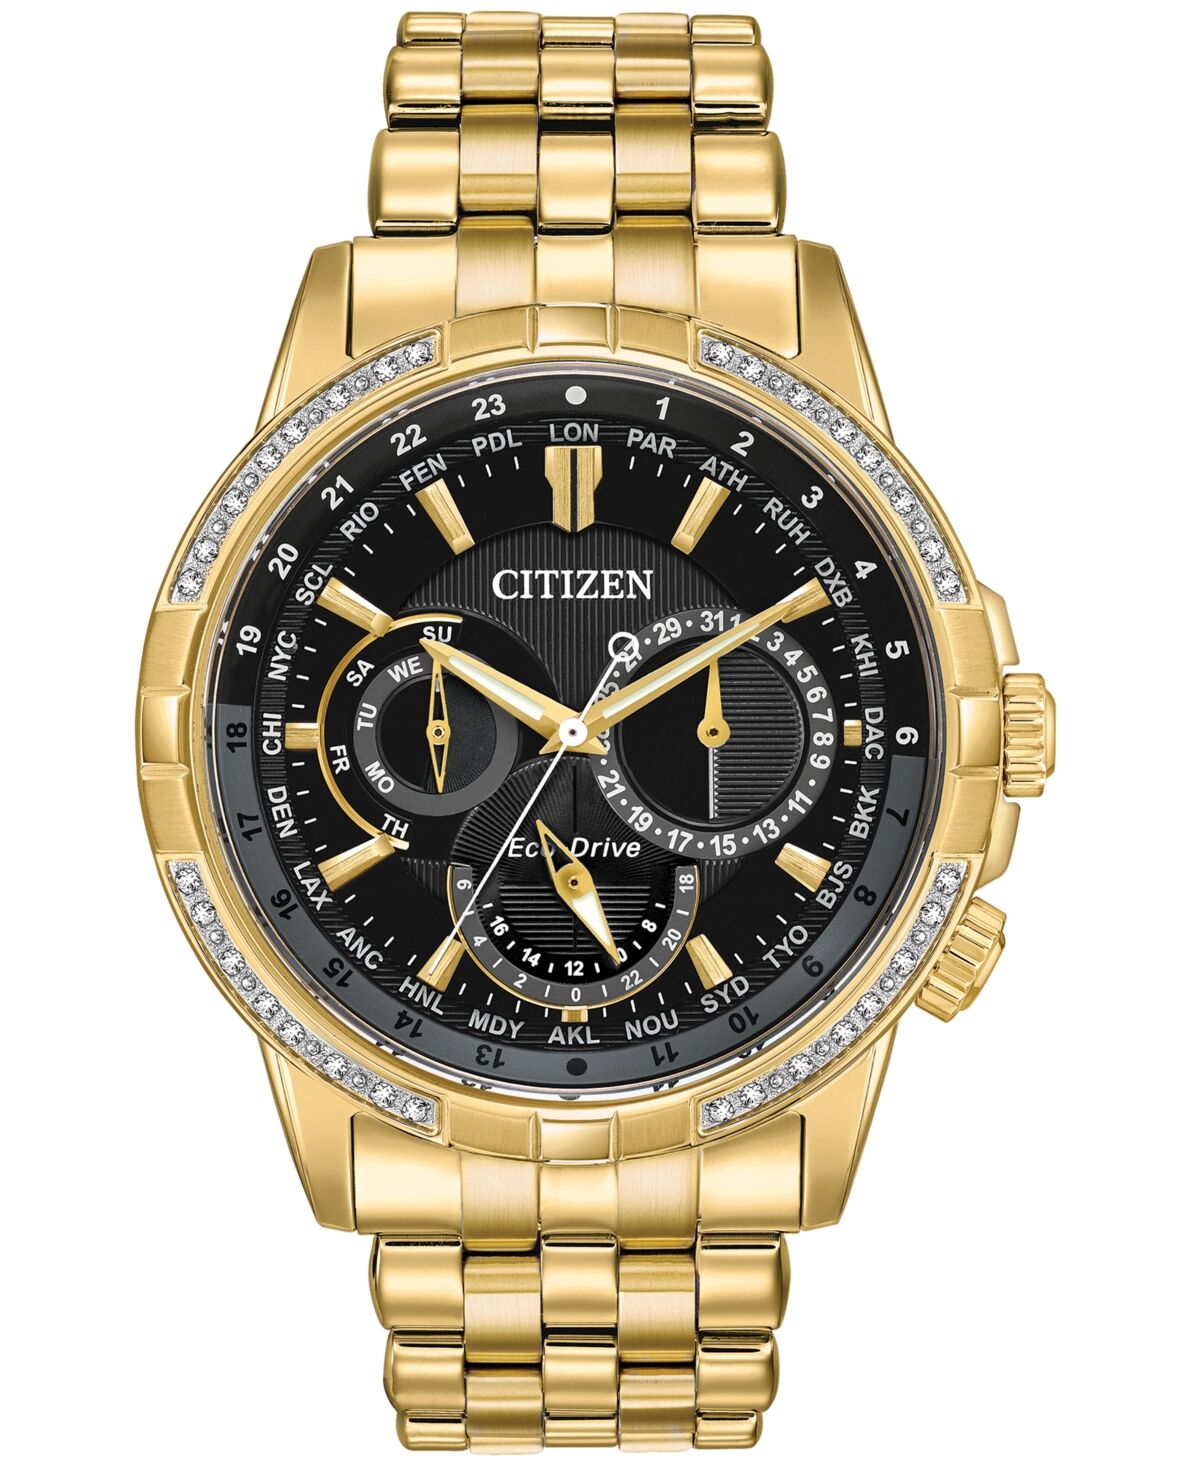 Citizen Eco-Drive Men's Calendrier Diamond-Accent Gold-Tone Stainless Steel Bracelet Watch 44mm - Gold Tone